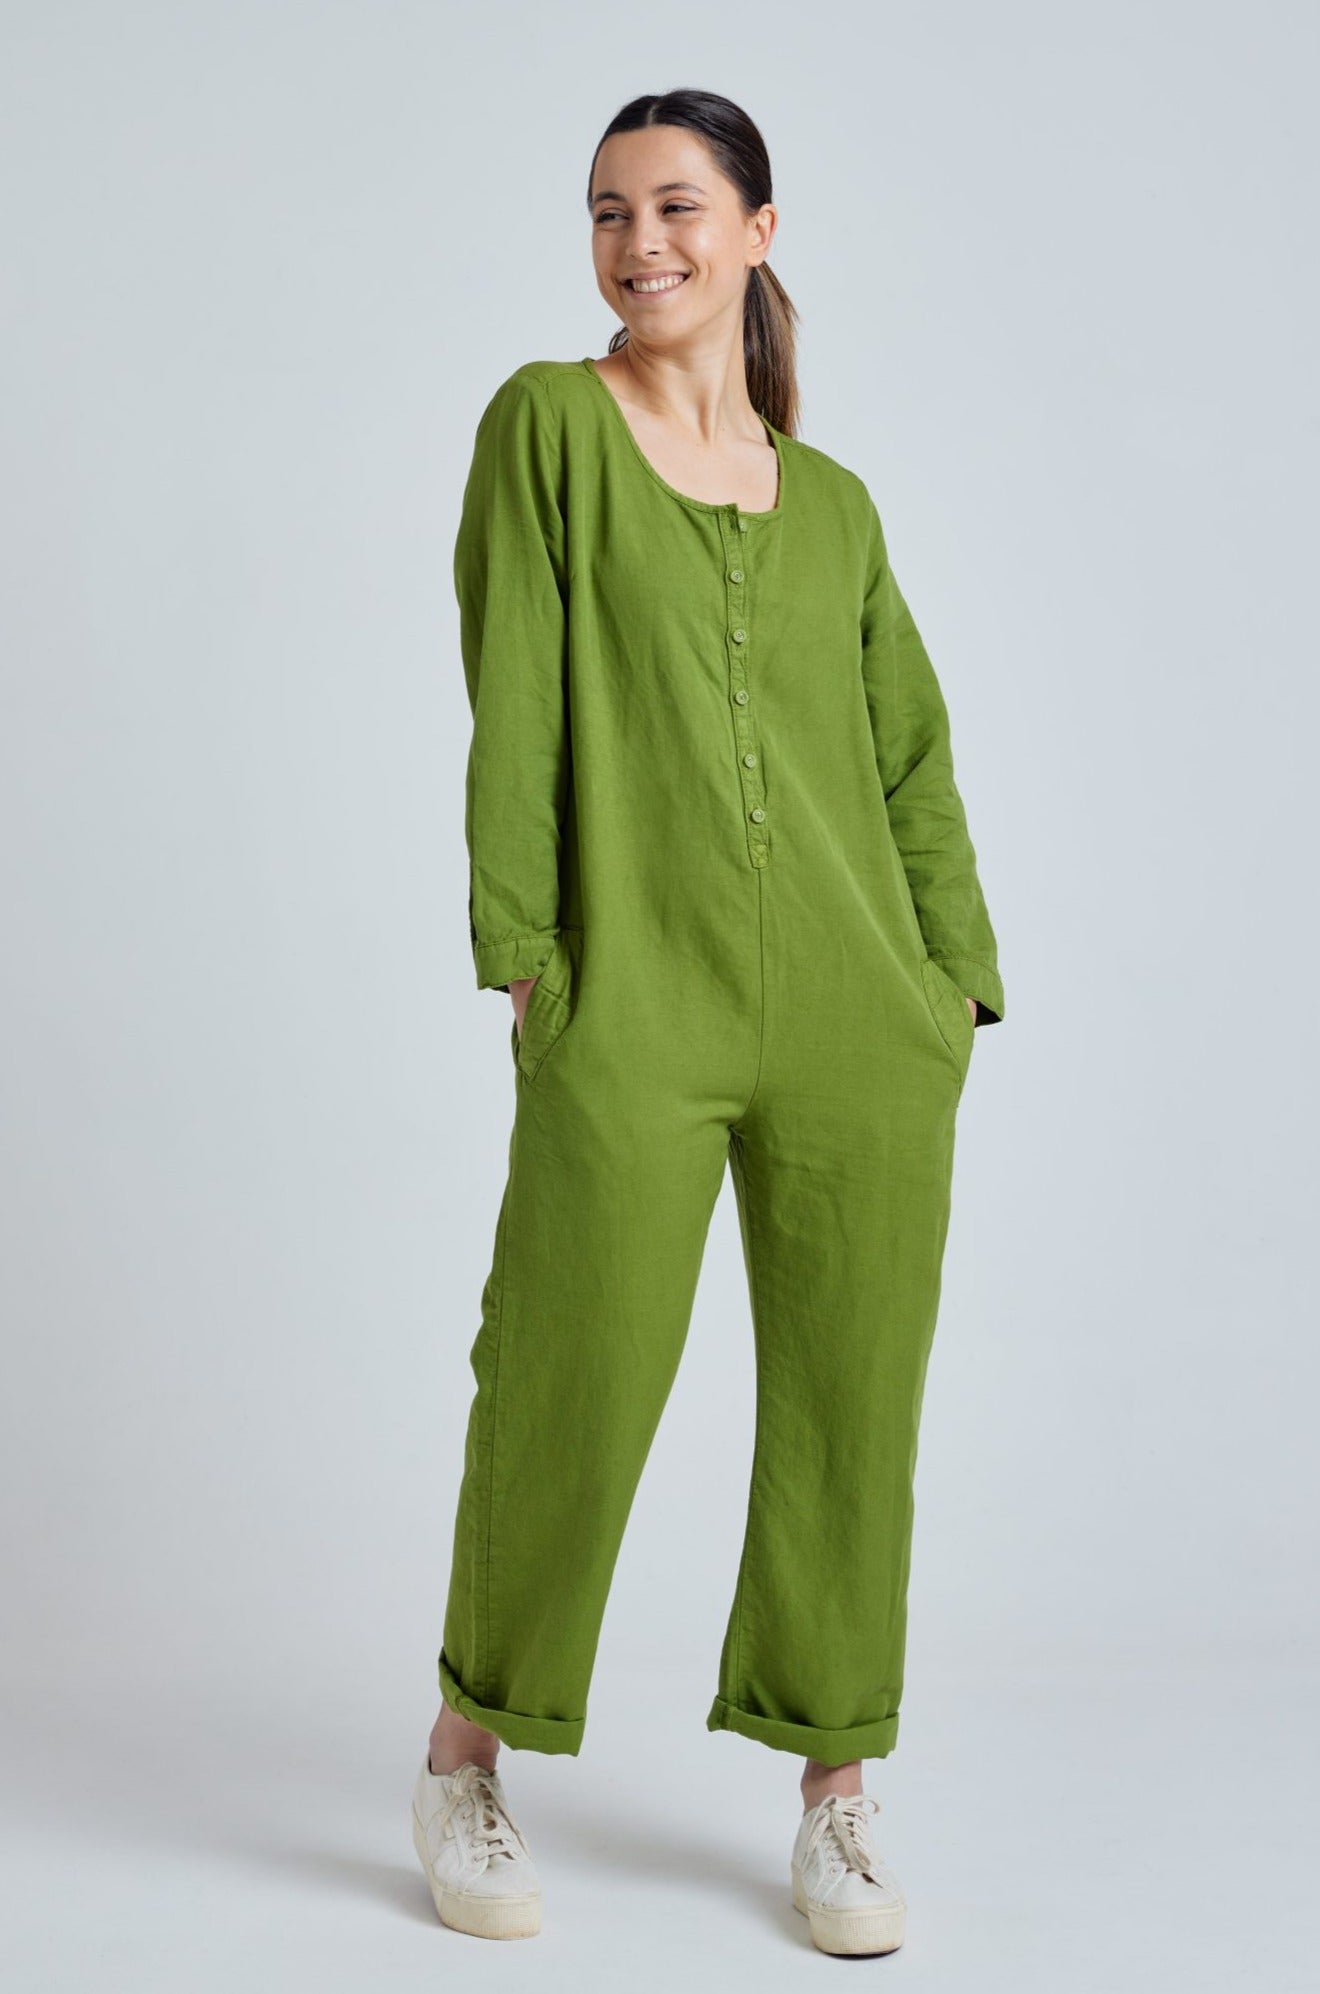 CLARA spring Green - GOTS Organic Cotton Jumpsuit by Flax & Loom, L